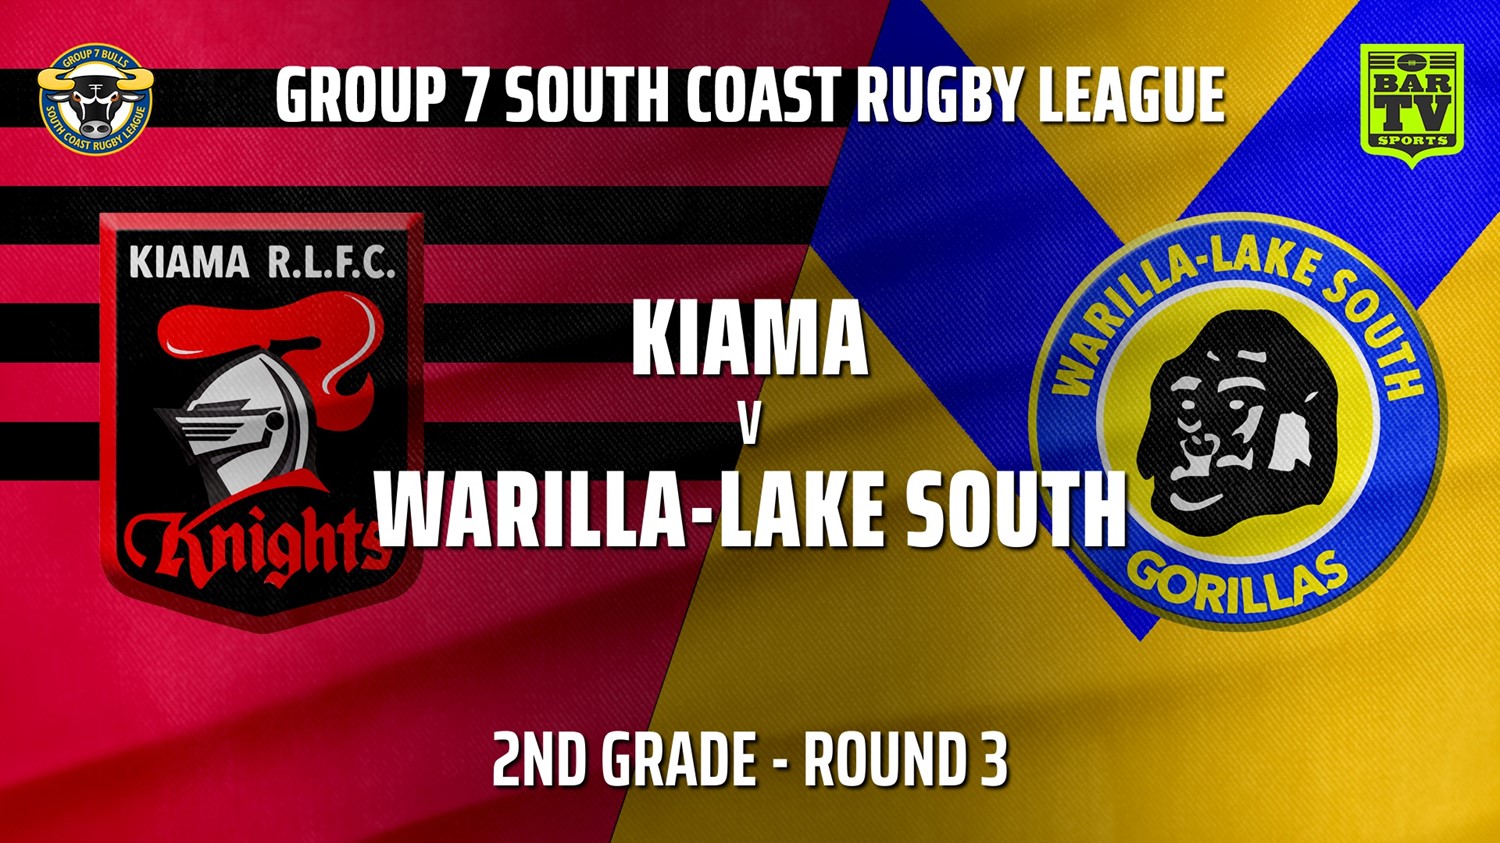 210502-Group 7 RL Round 3 - 2nd Grade - Kiama Knights v Warilla-Lake South Minigame Slate Image